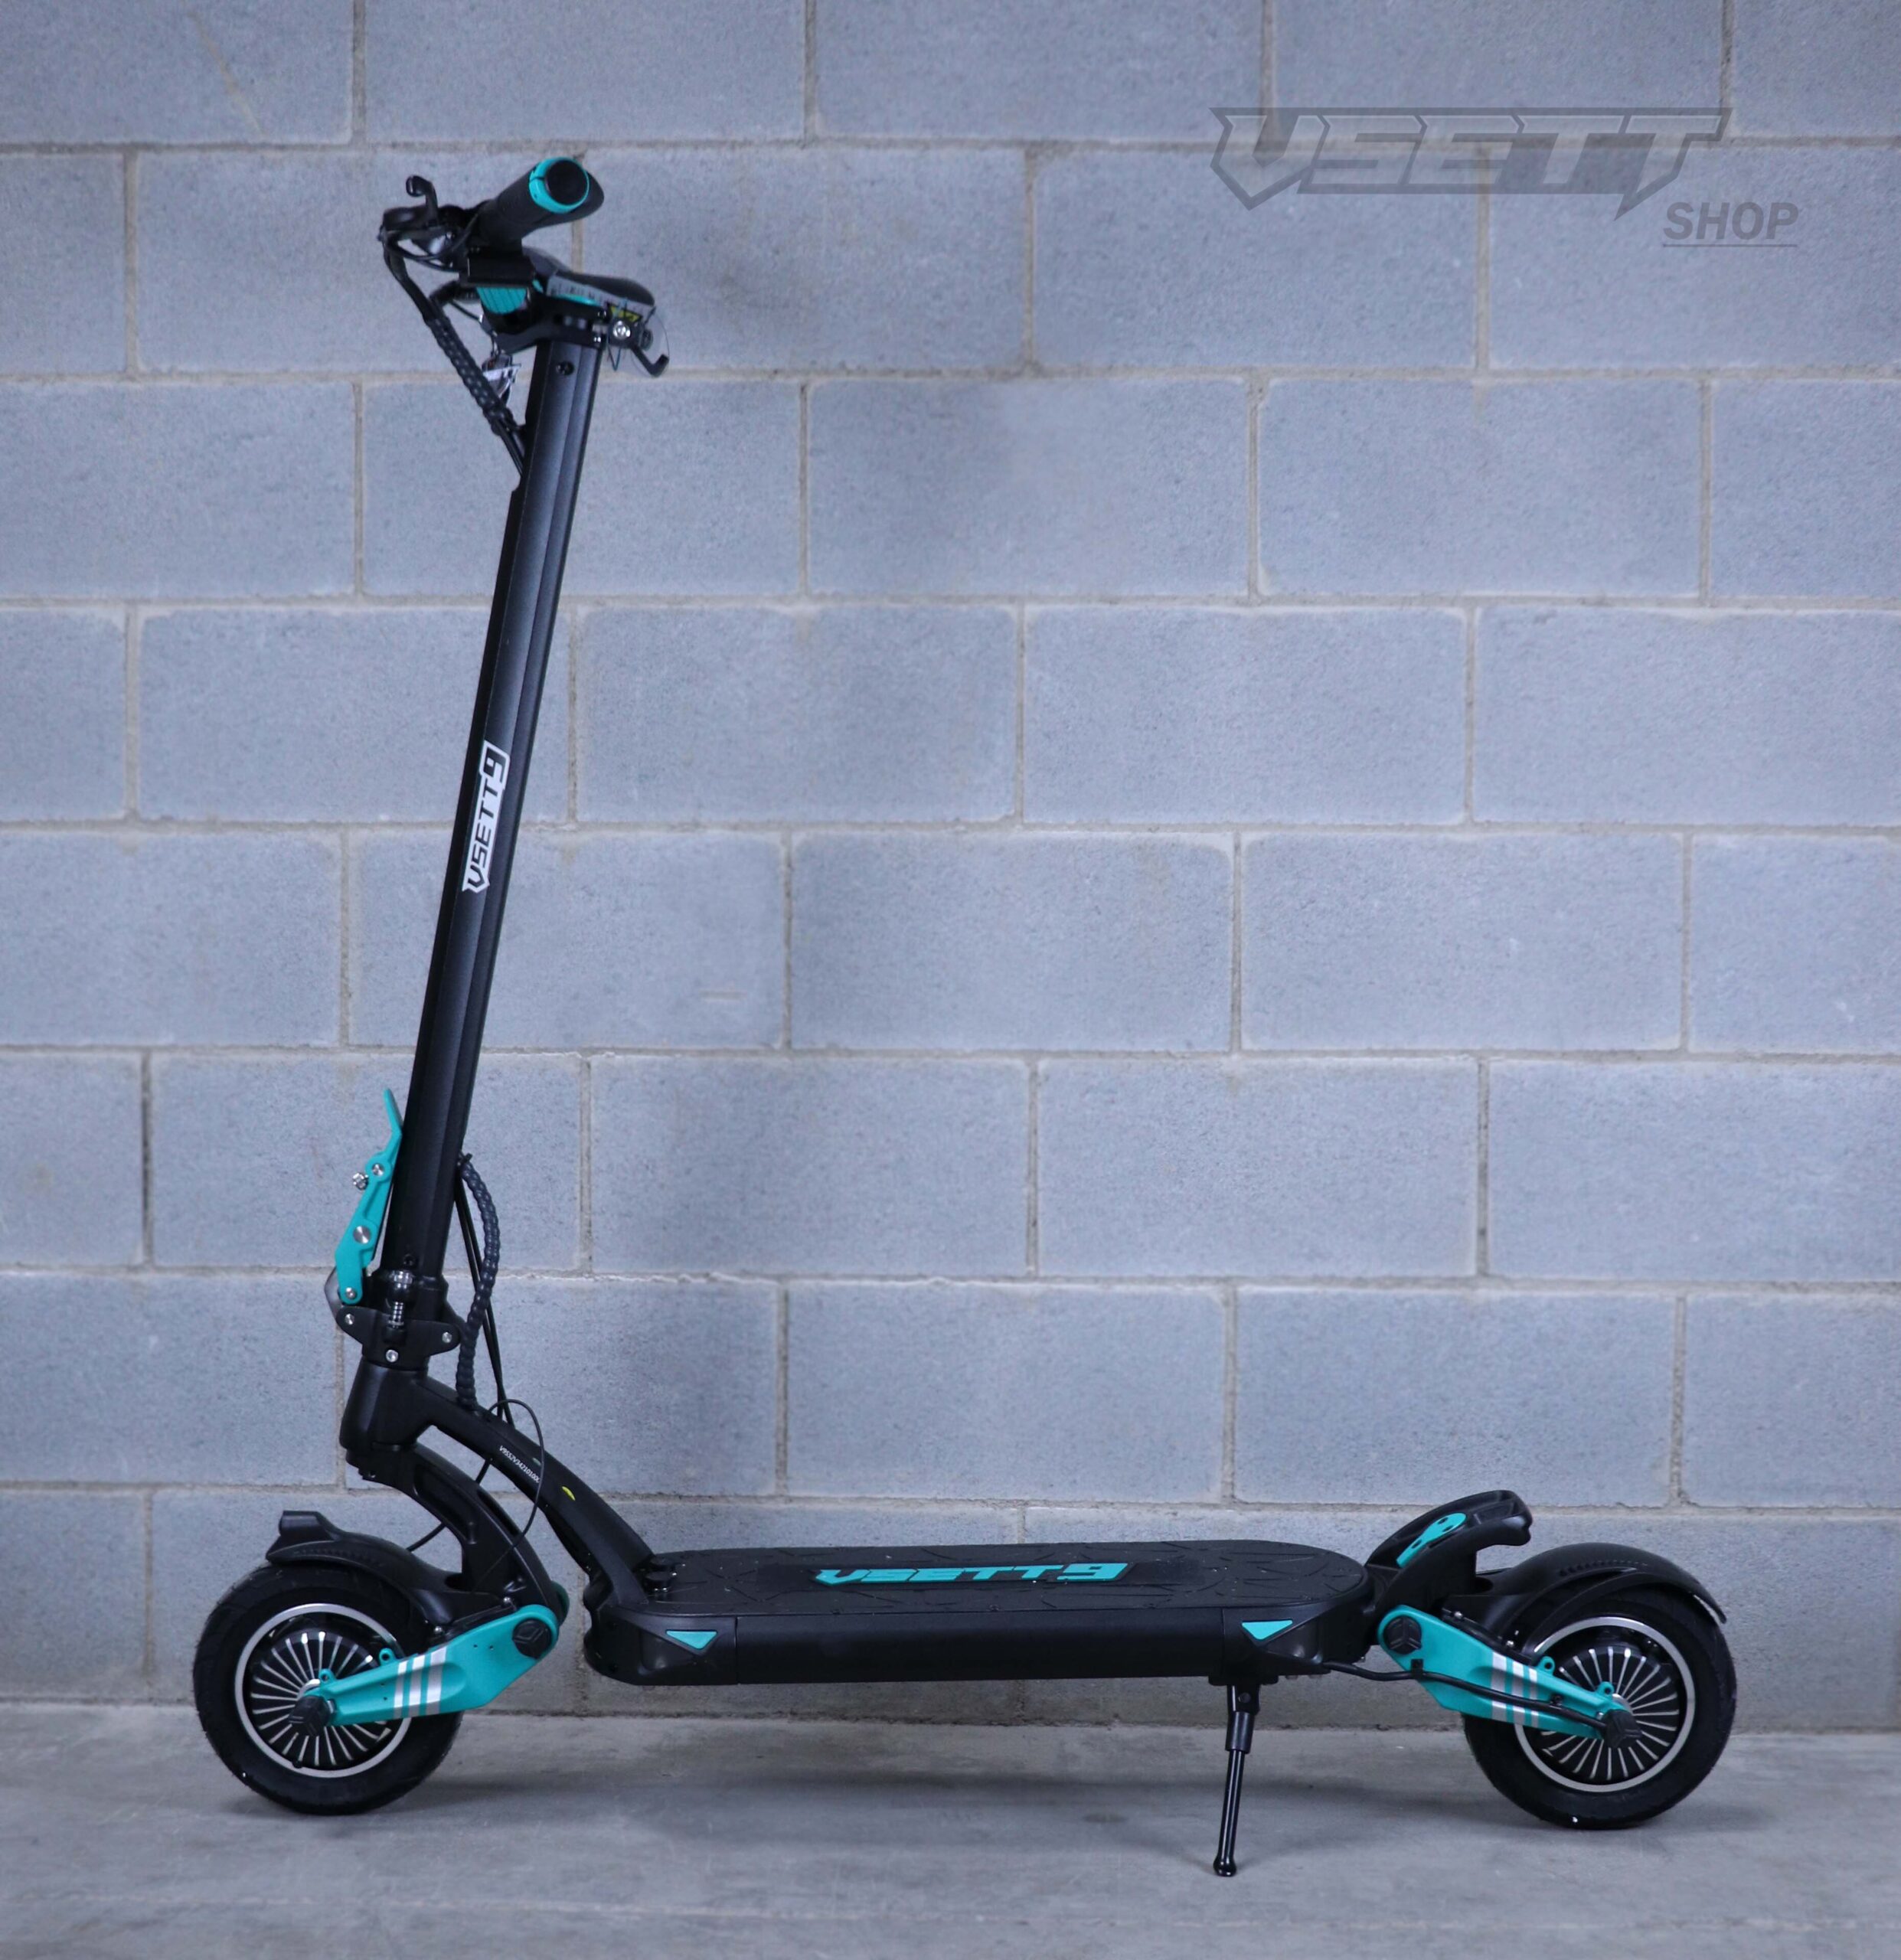 vsett 9 plus electric scooter 2